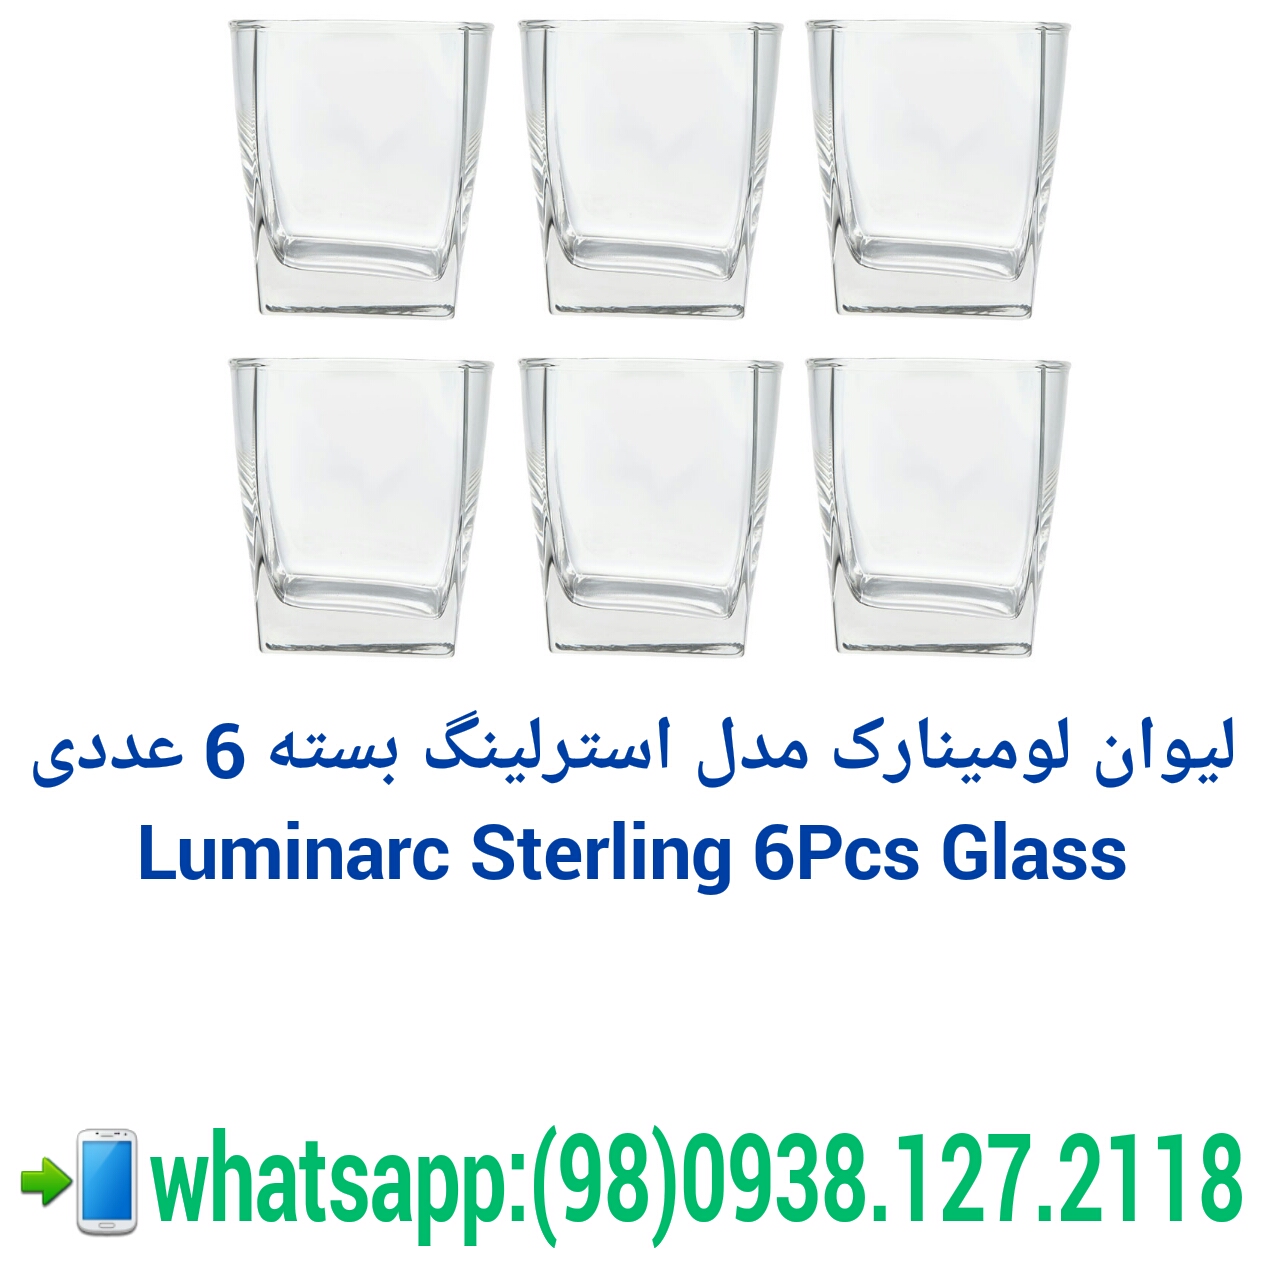 luminarc teapot,luminarc kettle,buy luminarc glassware,خرید عمده لیوان لومینارک ,کارخانه لومینارک فرانسه,لیوان لومینارک مدل استرلینگ بسته 6 عددی  ,Luminarc Sterling 6Pcs Glass      